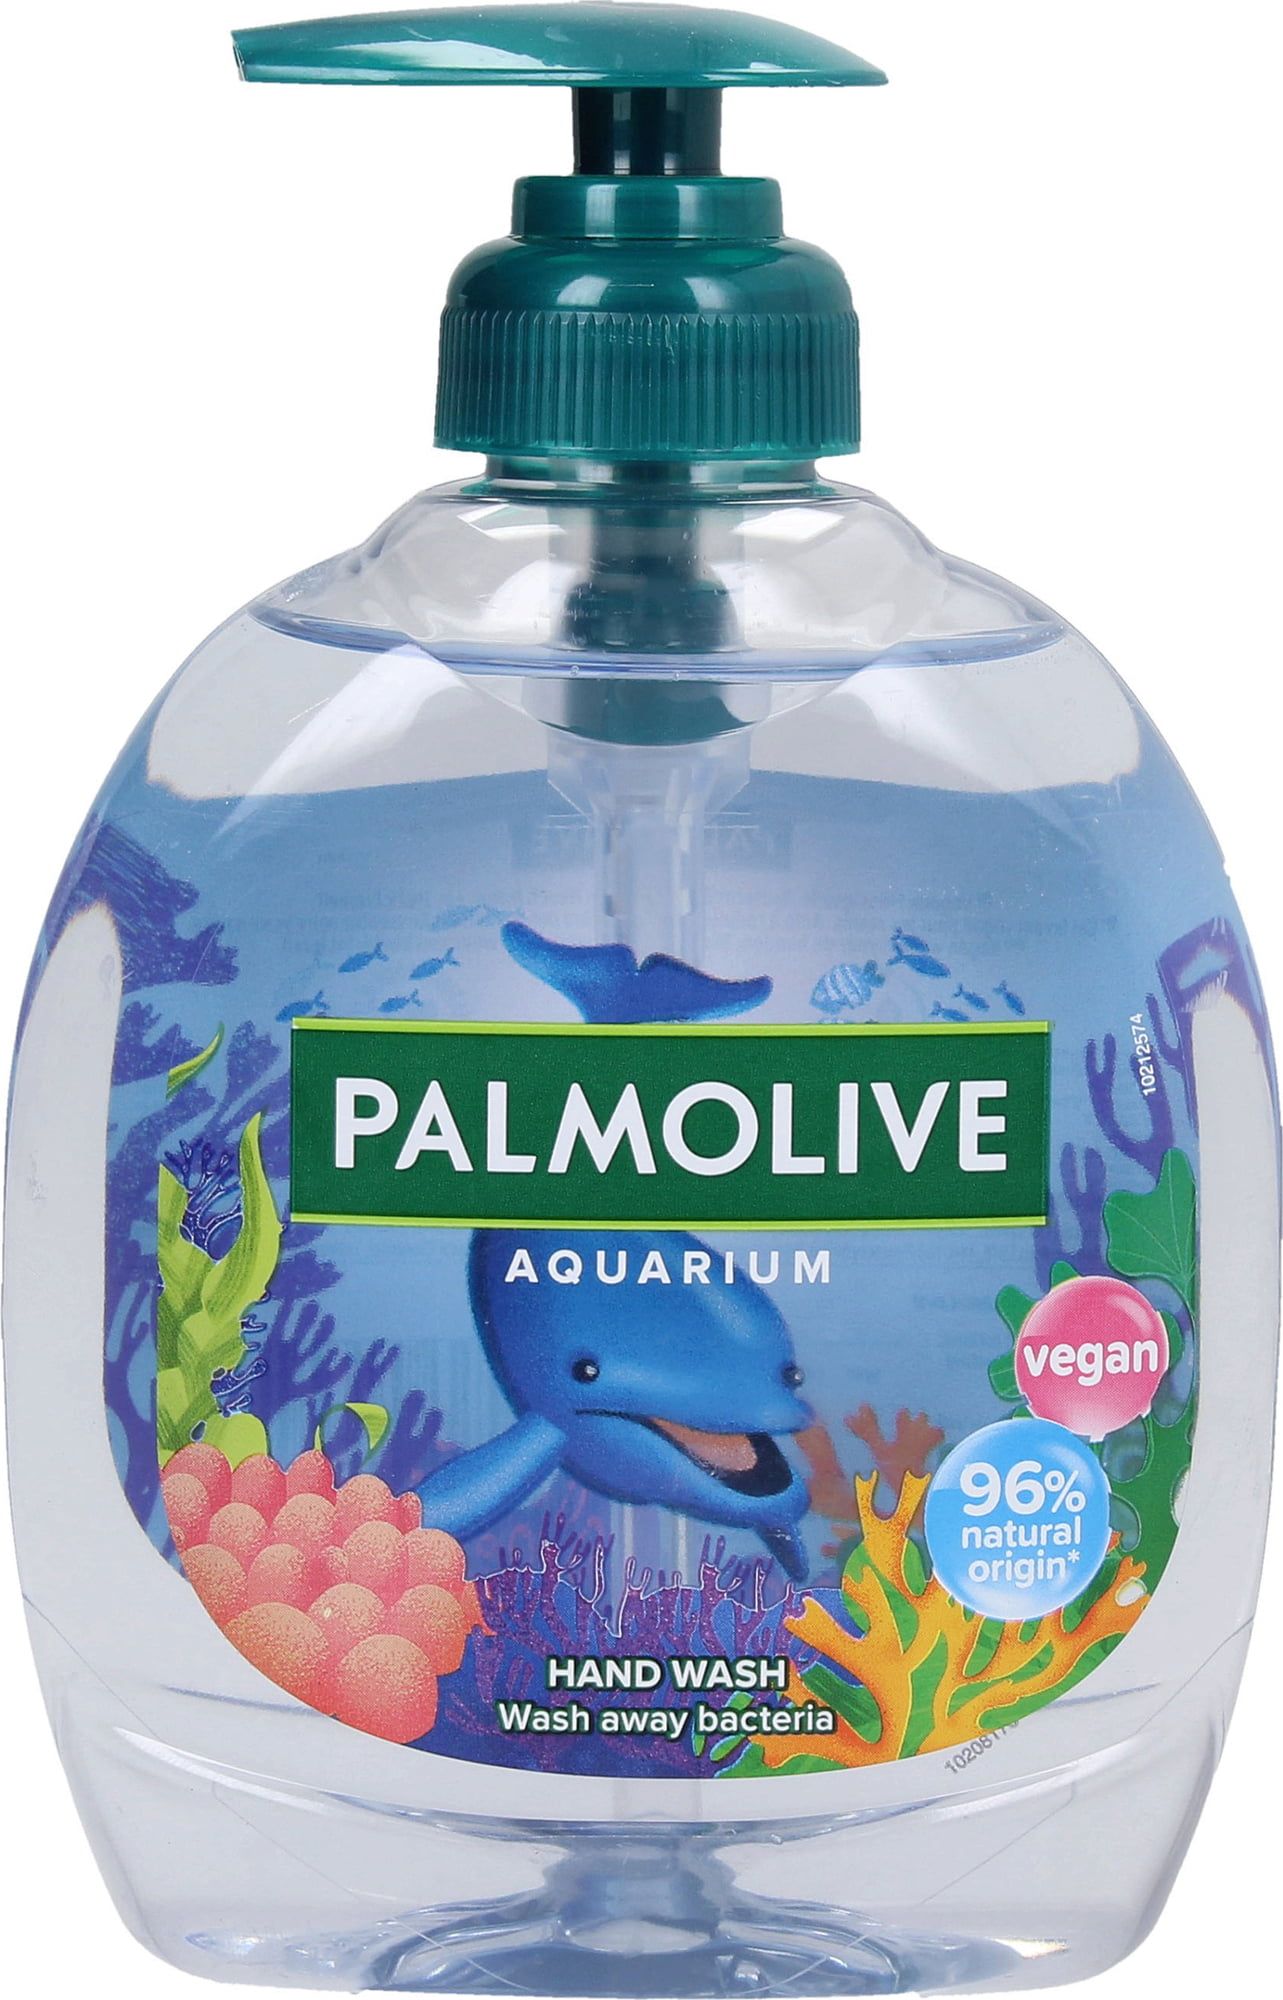 https://of.nice-cdn.com/upload/image/product/large/default/palmolive-sabonete-liquido-aquarium-300-ml-428184-pt.jpg